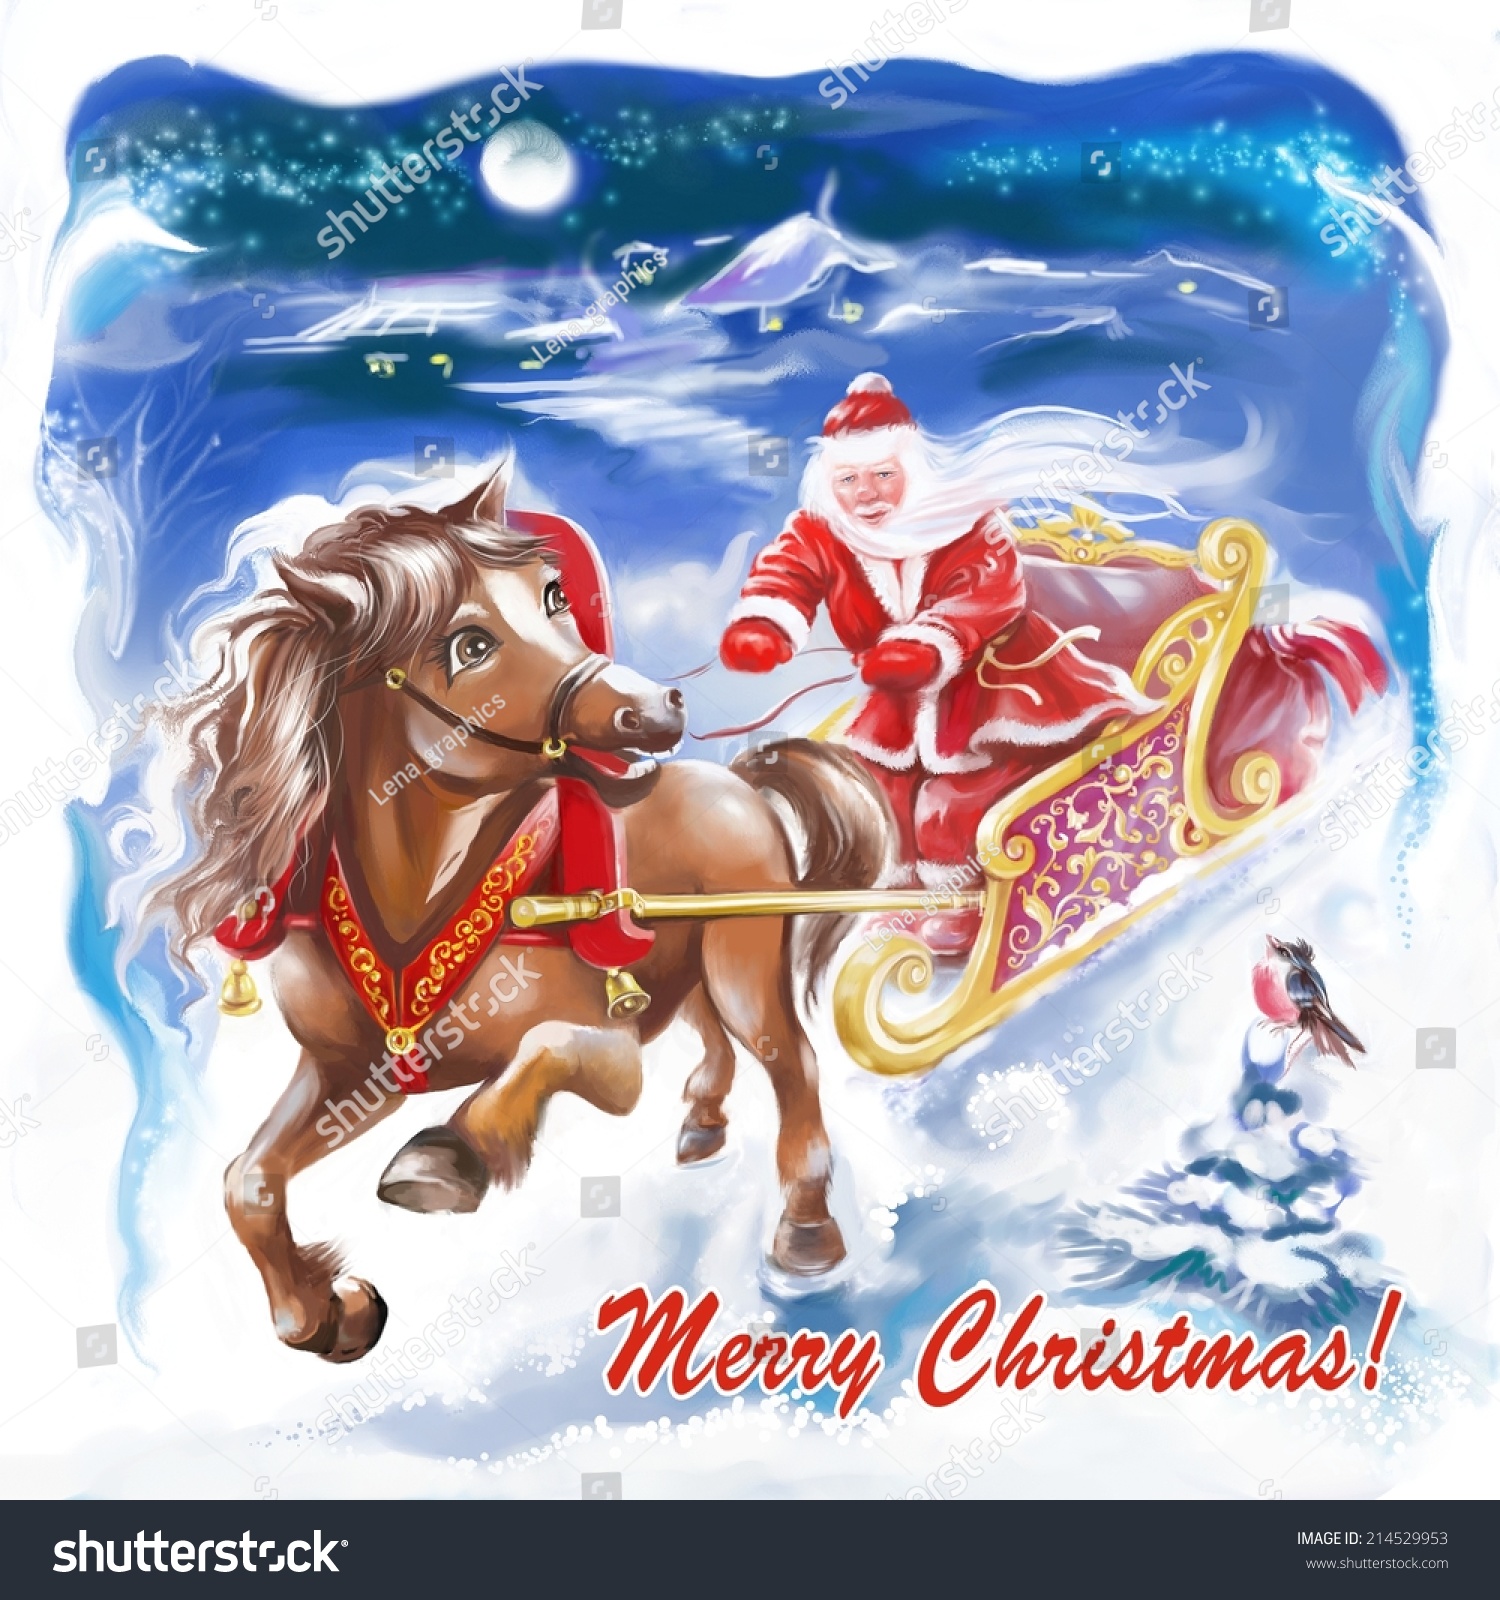 Дед Мороз на санях с конями